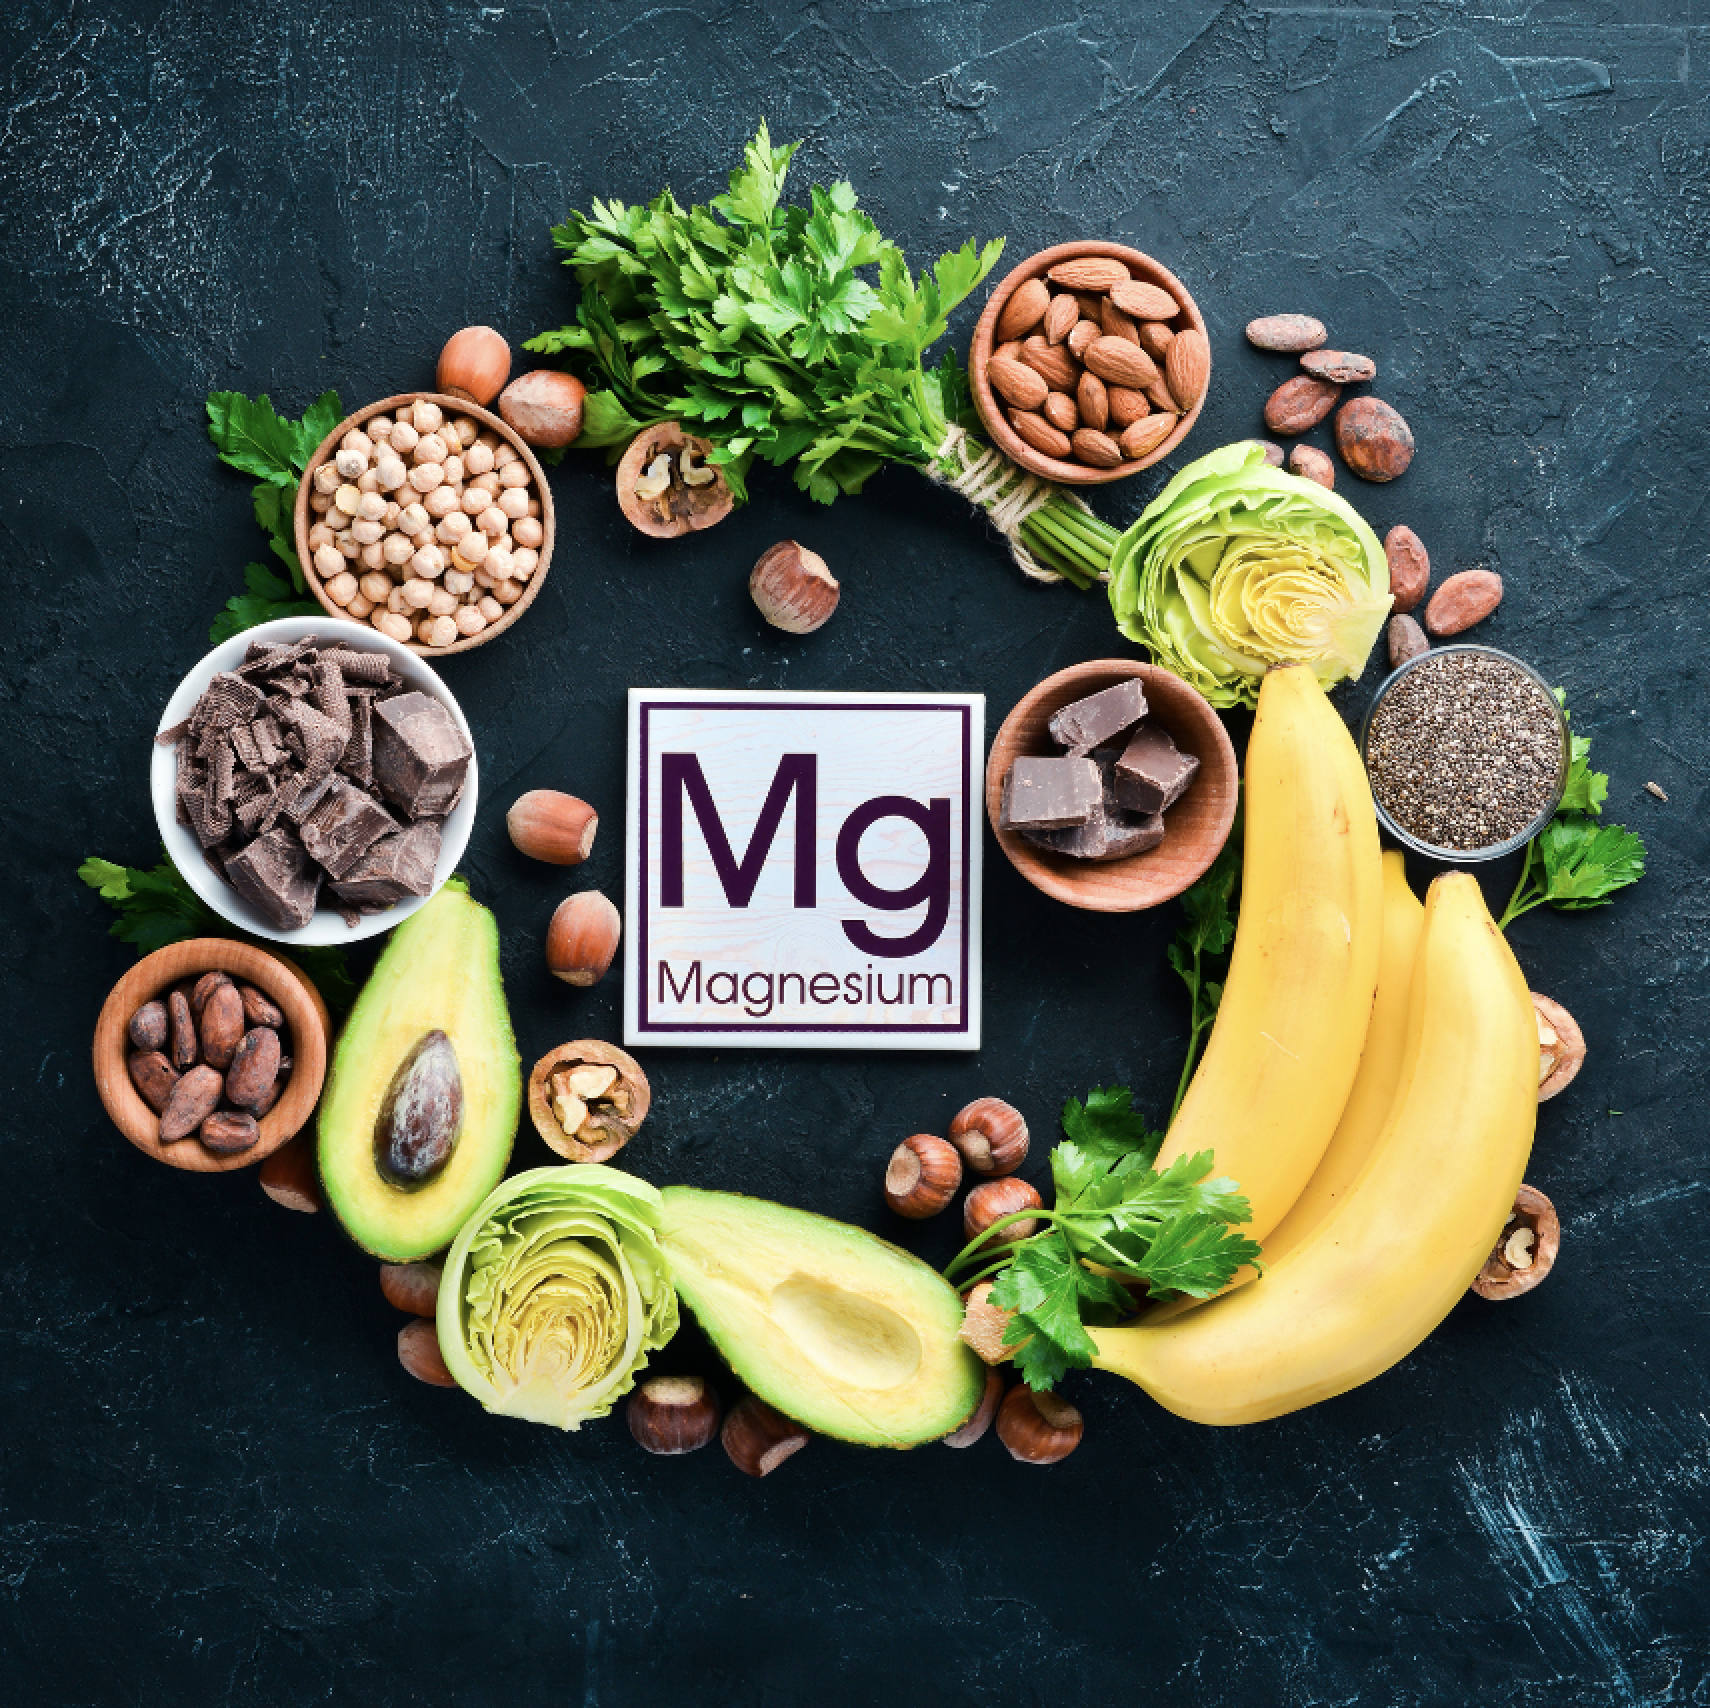 Greater Magnesium Intake May Reduce Dementia Risk